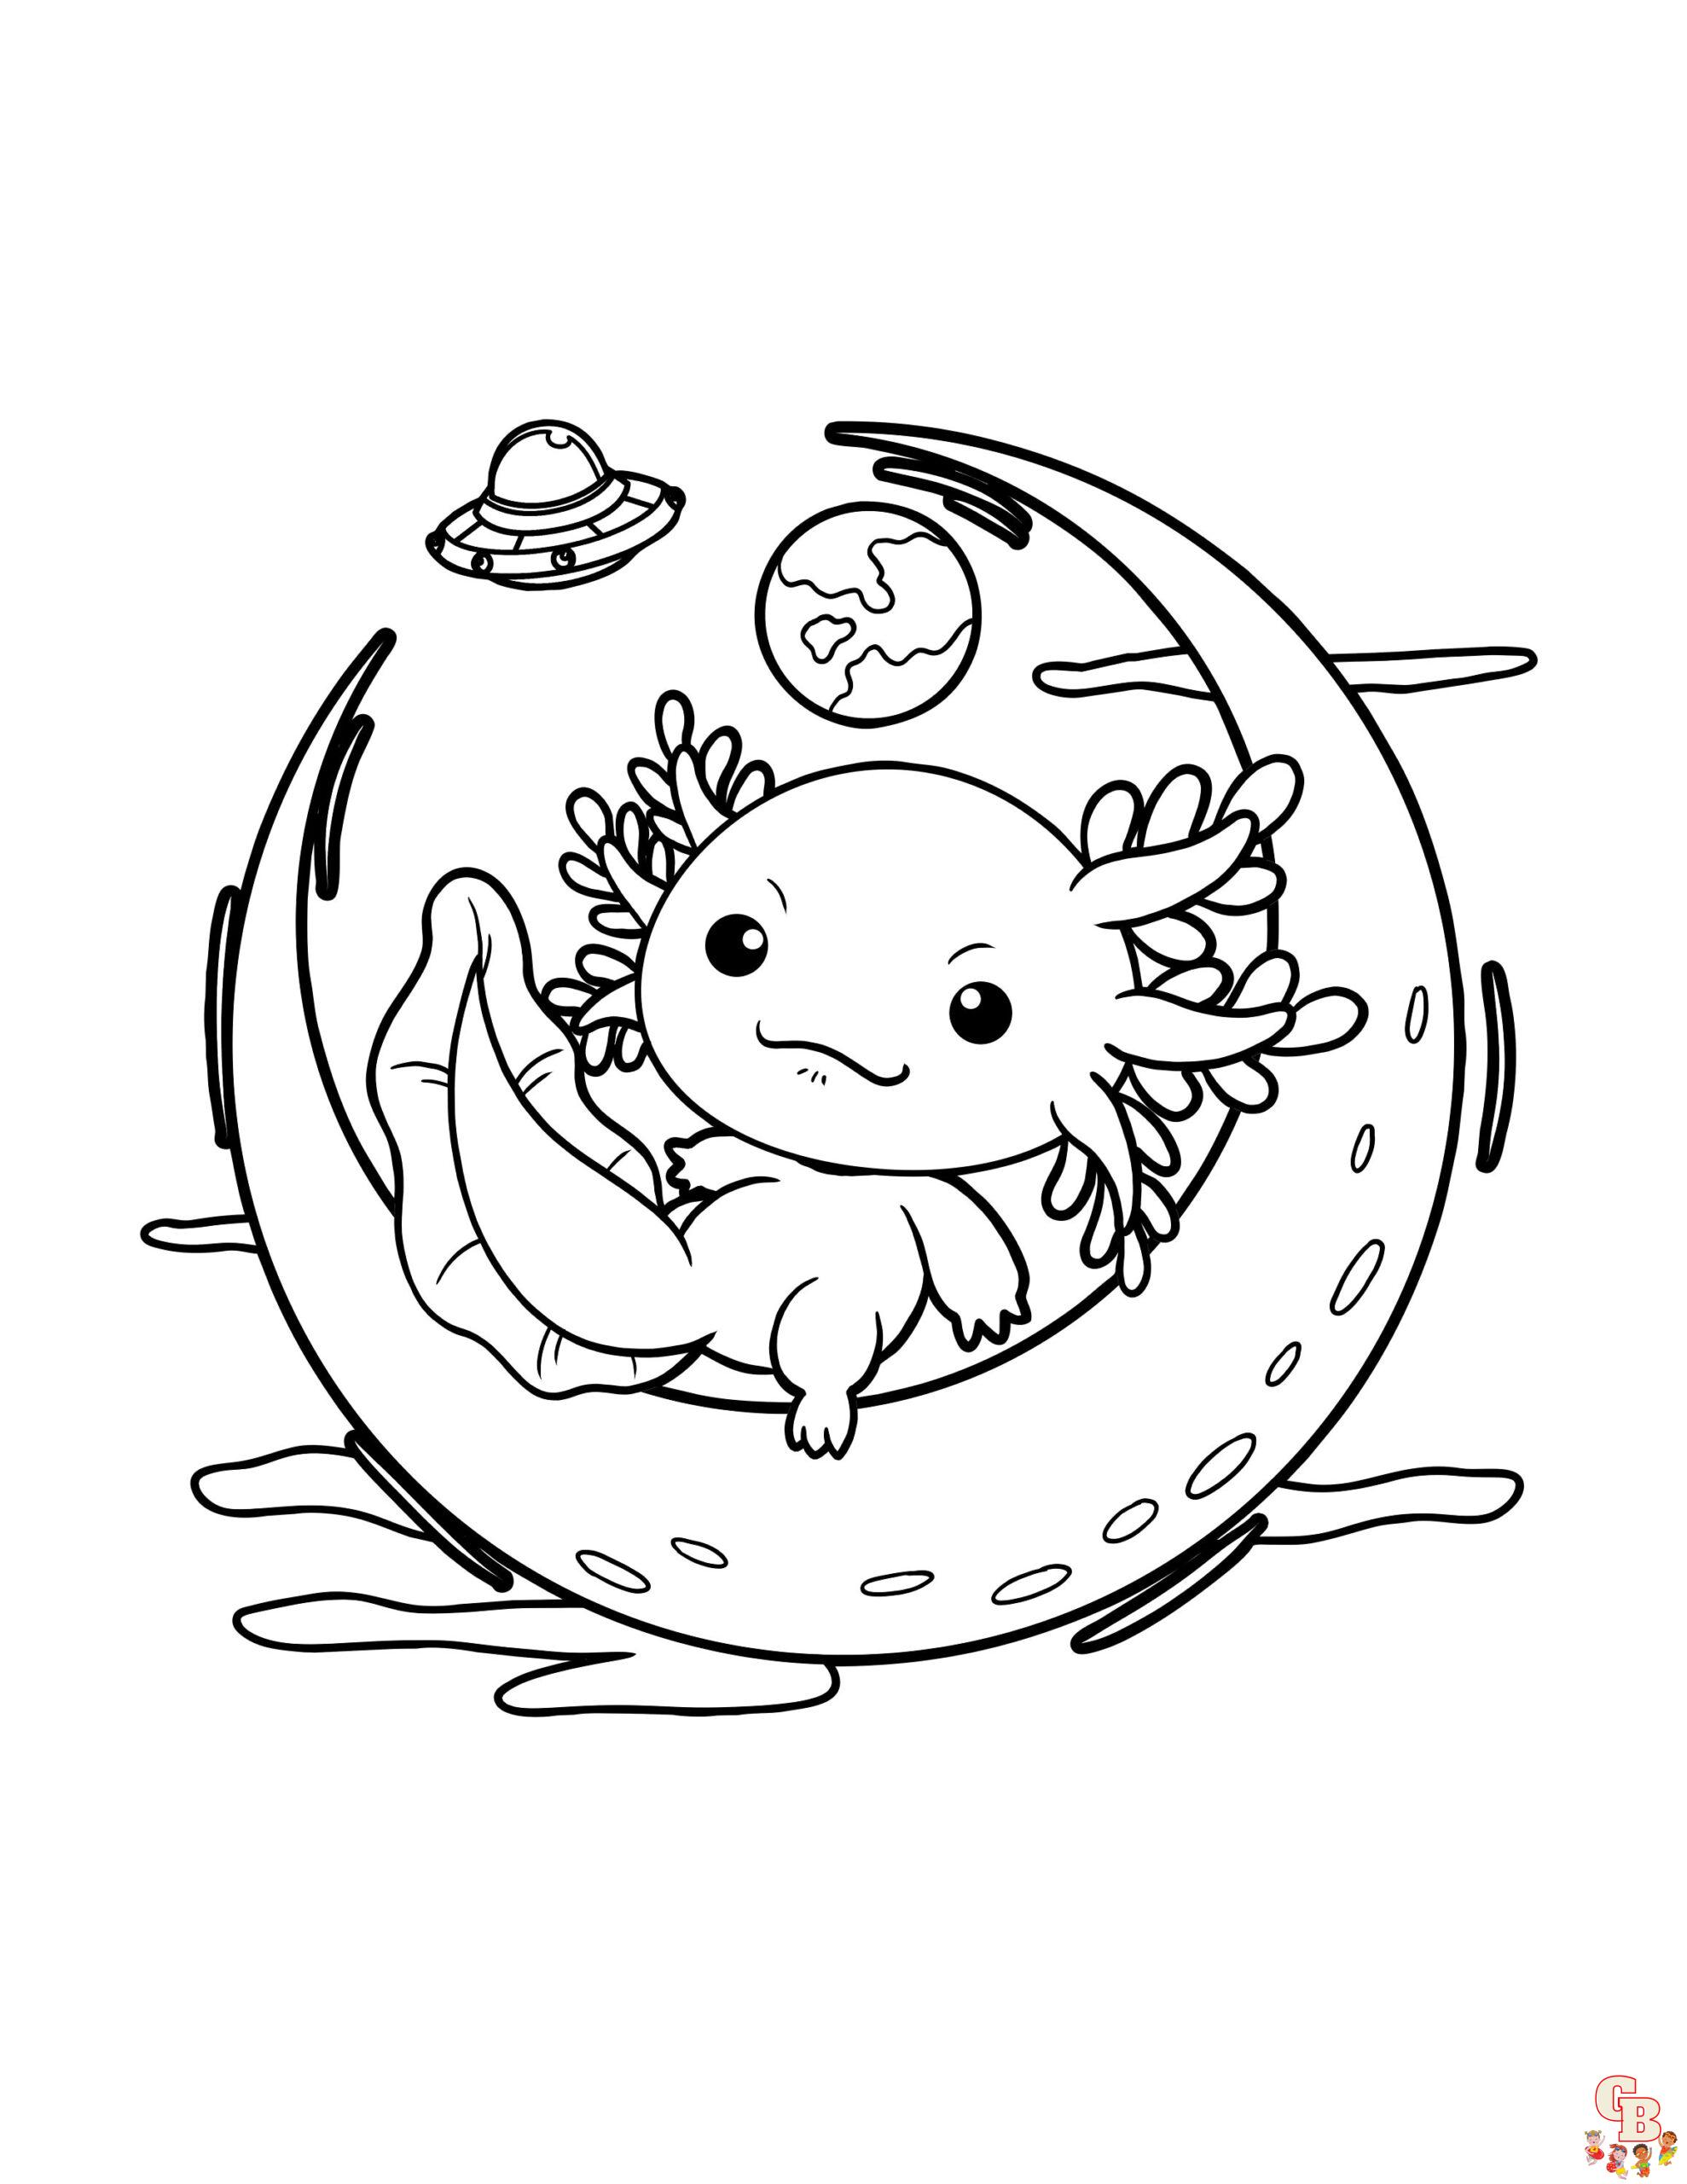 Axolotl ausmalbilder zum ausdrucken